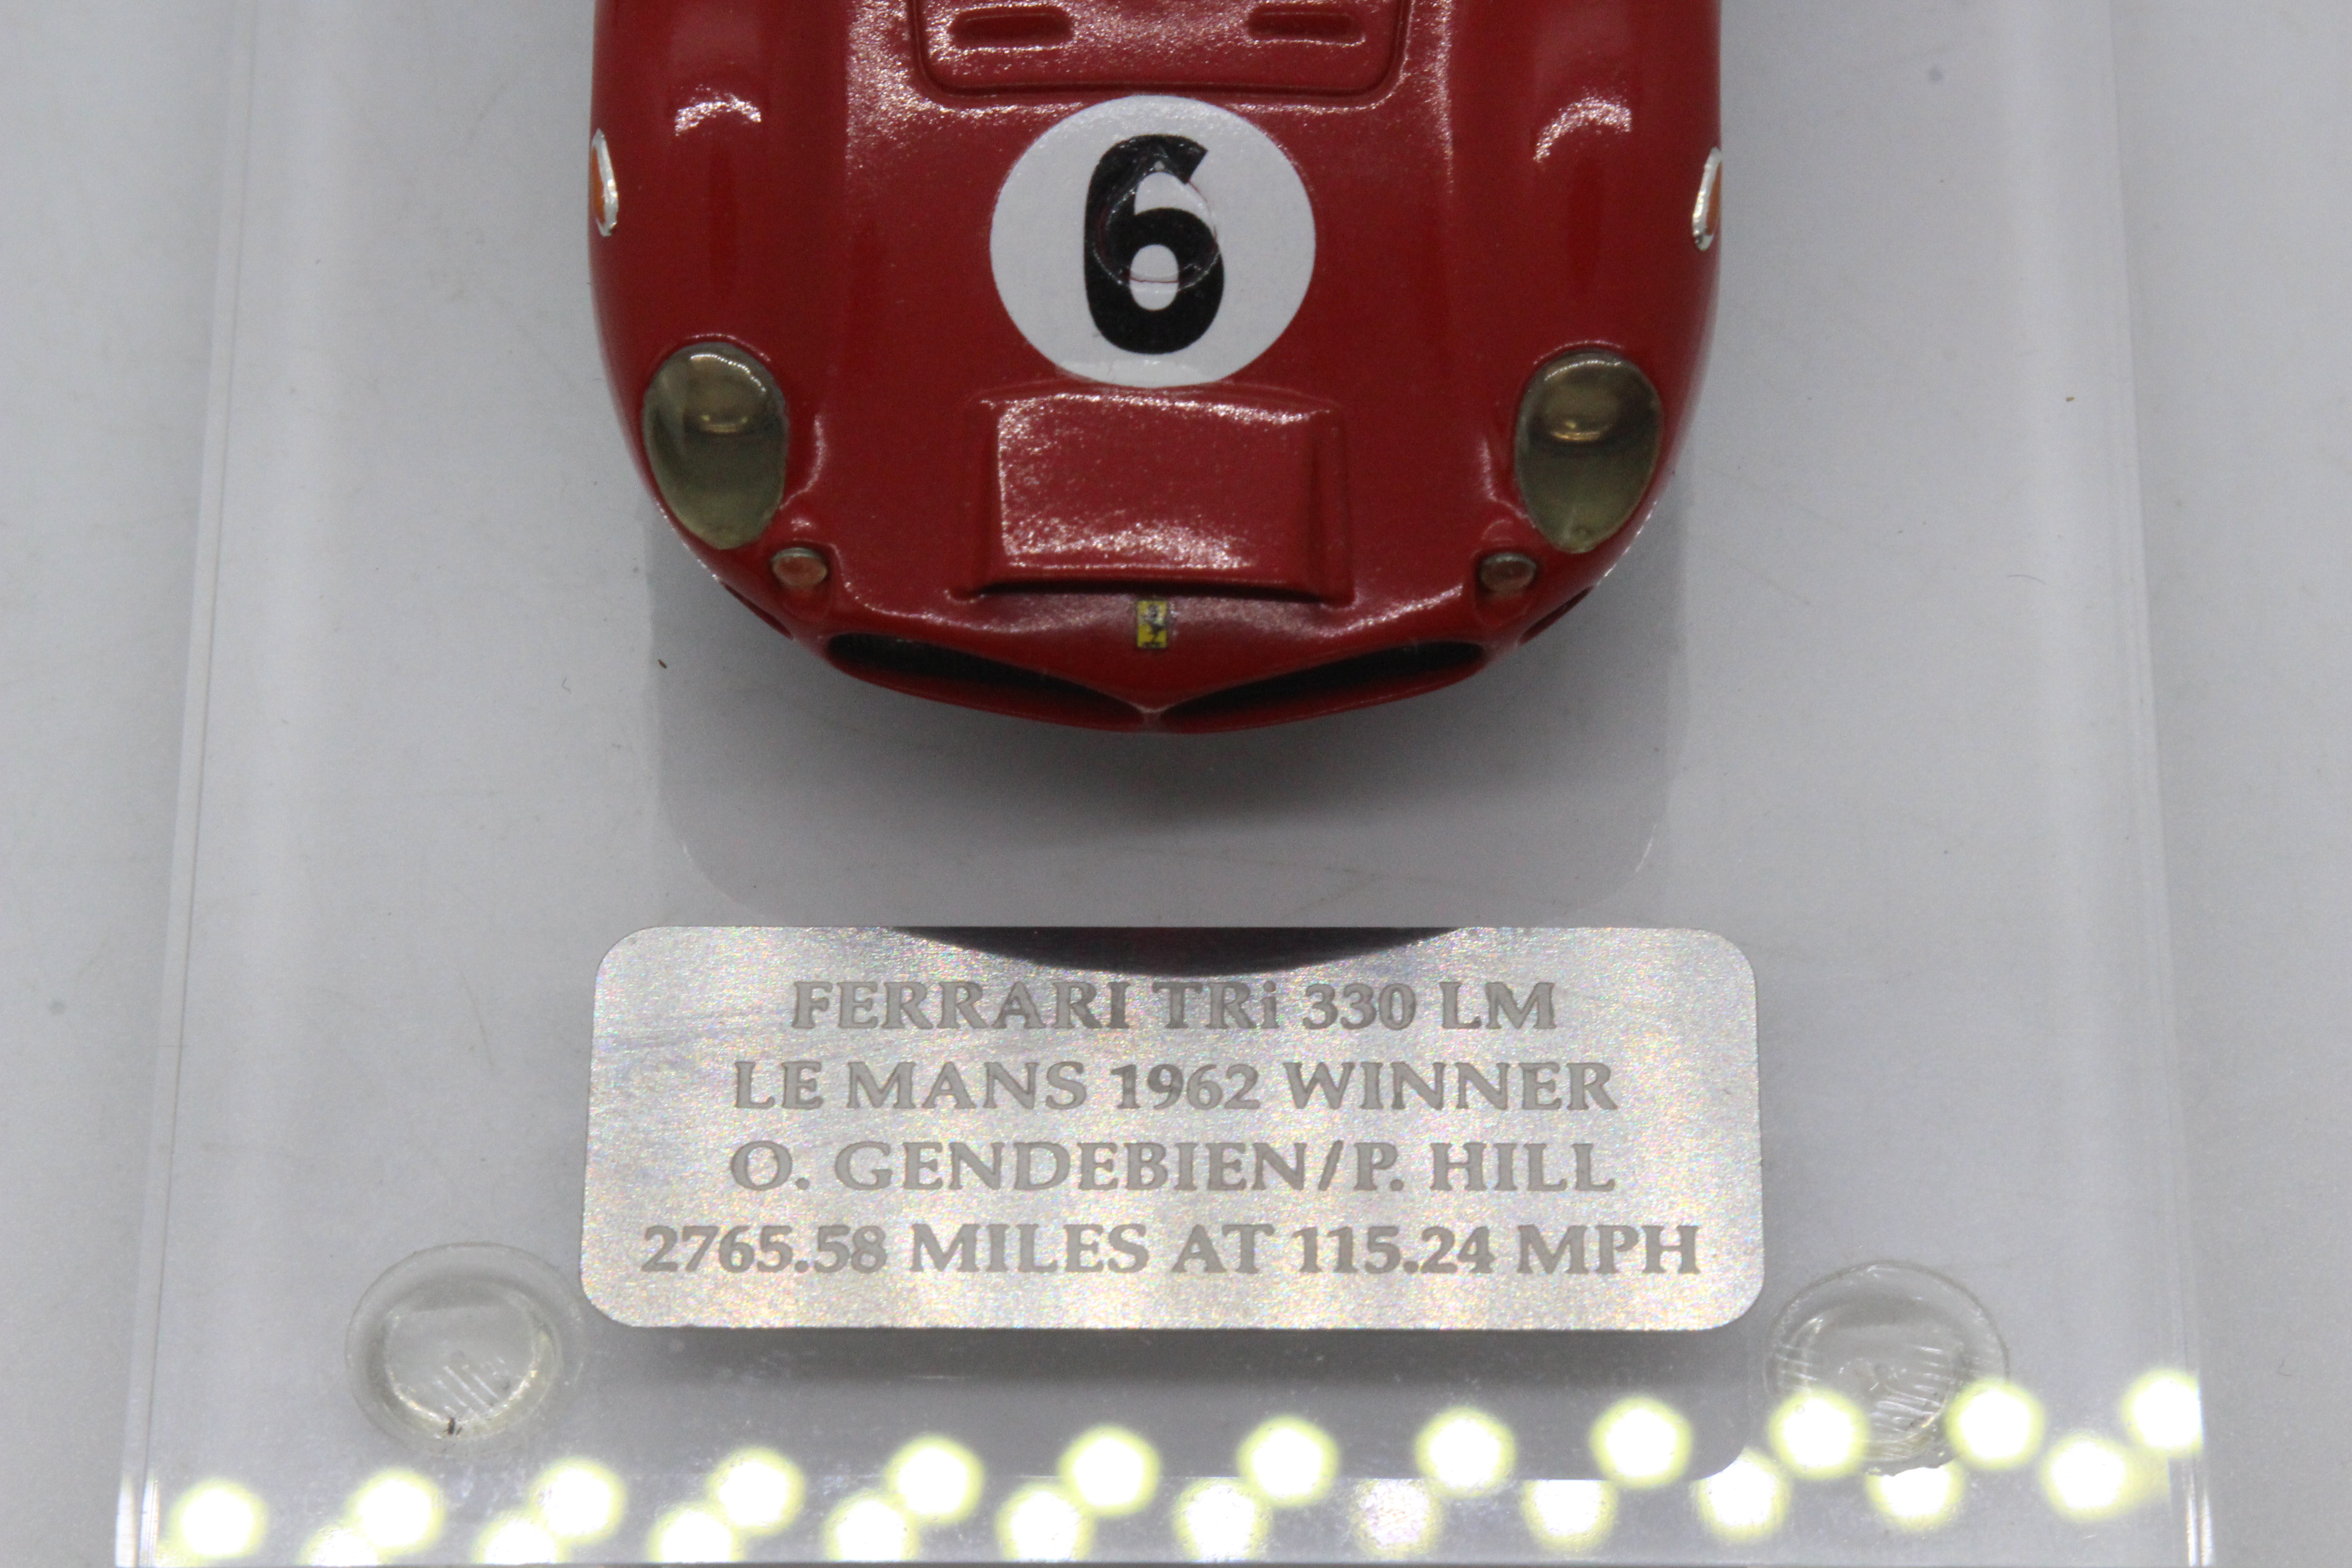 Mini Racing, MPH Models, Tim Dyke - A boxed MPH models #11246 Ferrari TRi 330 Le Man Winner 1962 O. - Image 9 of 9